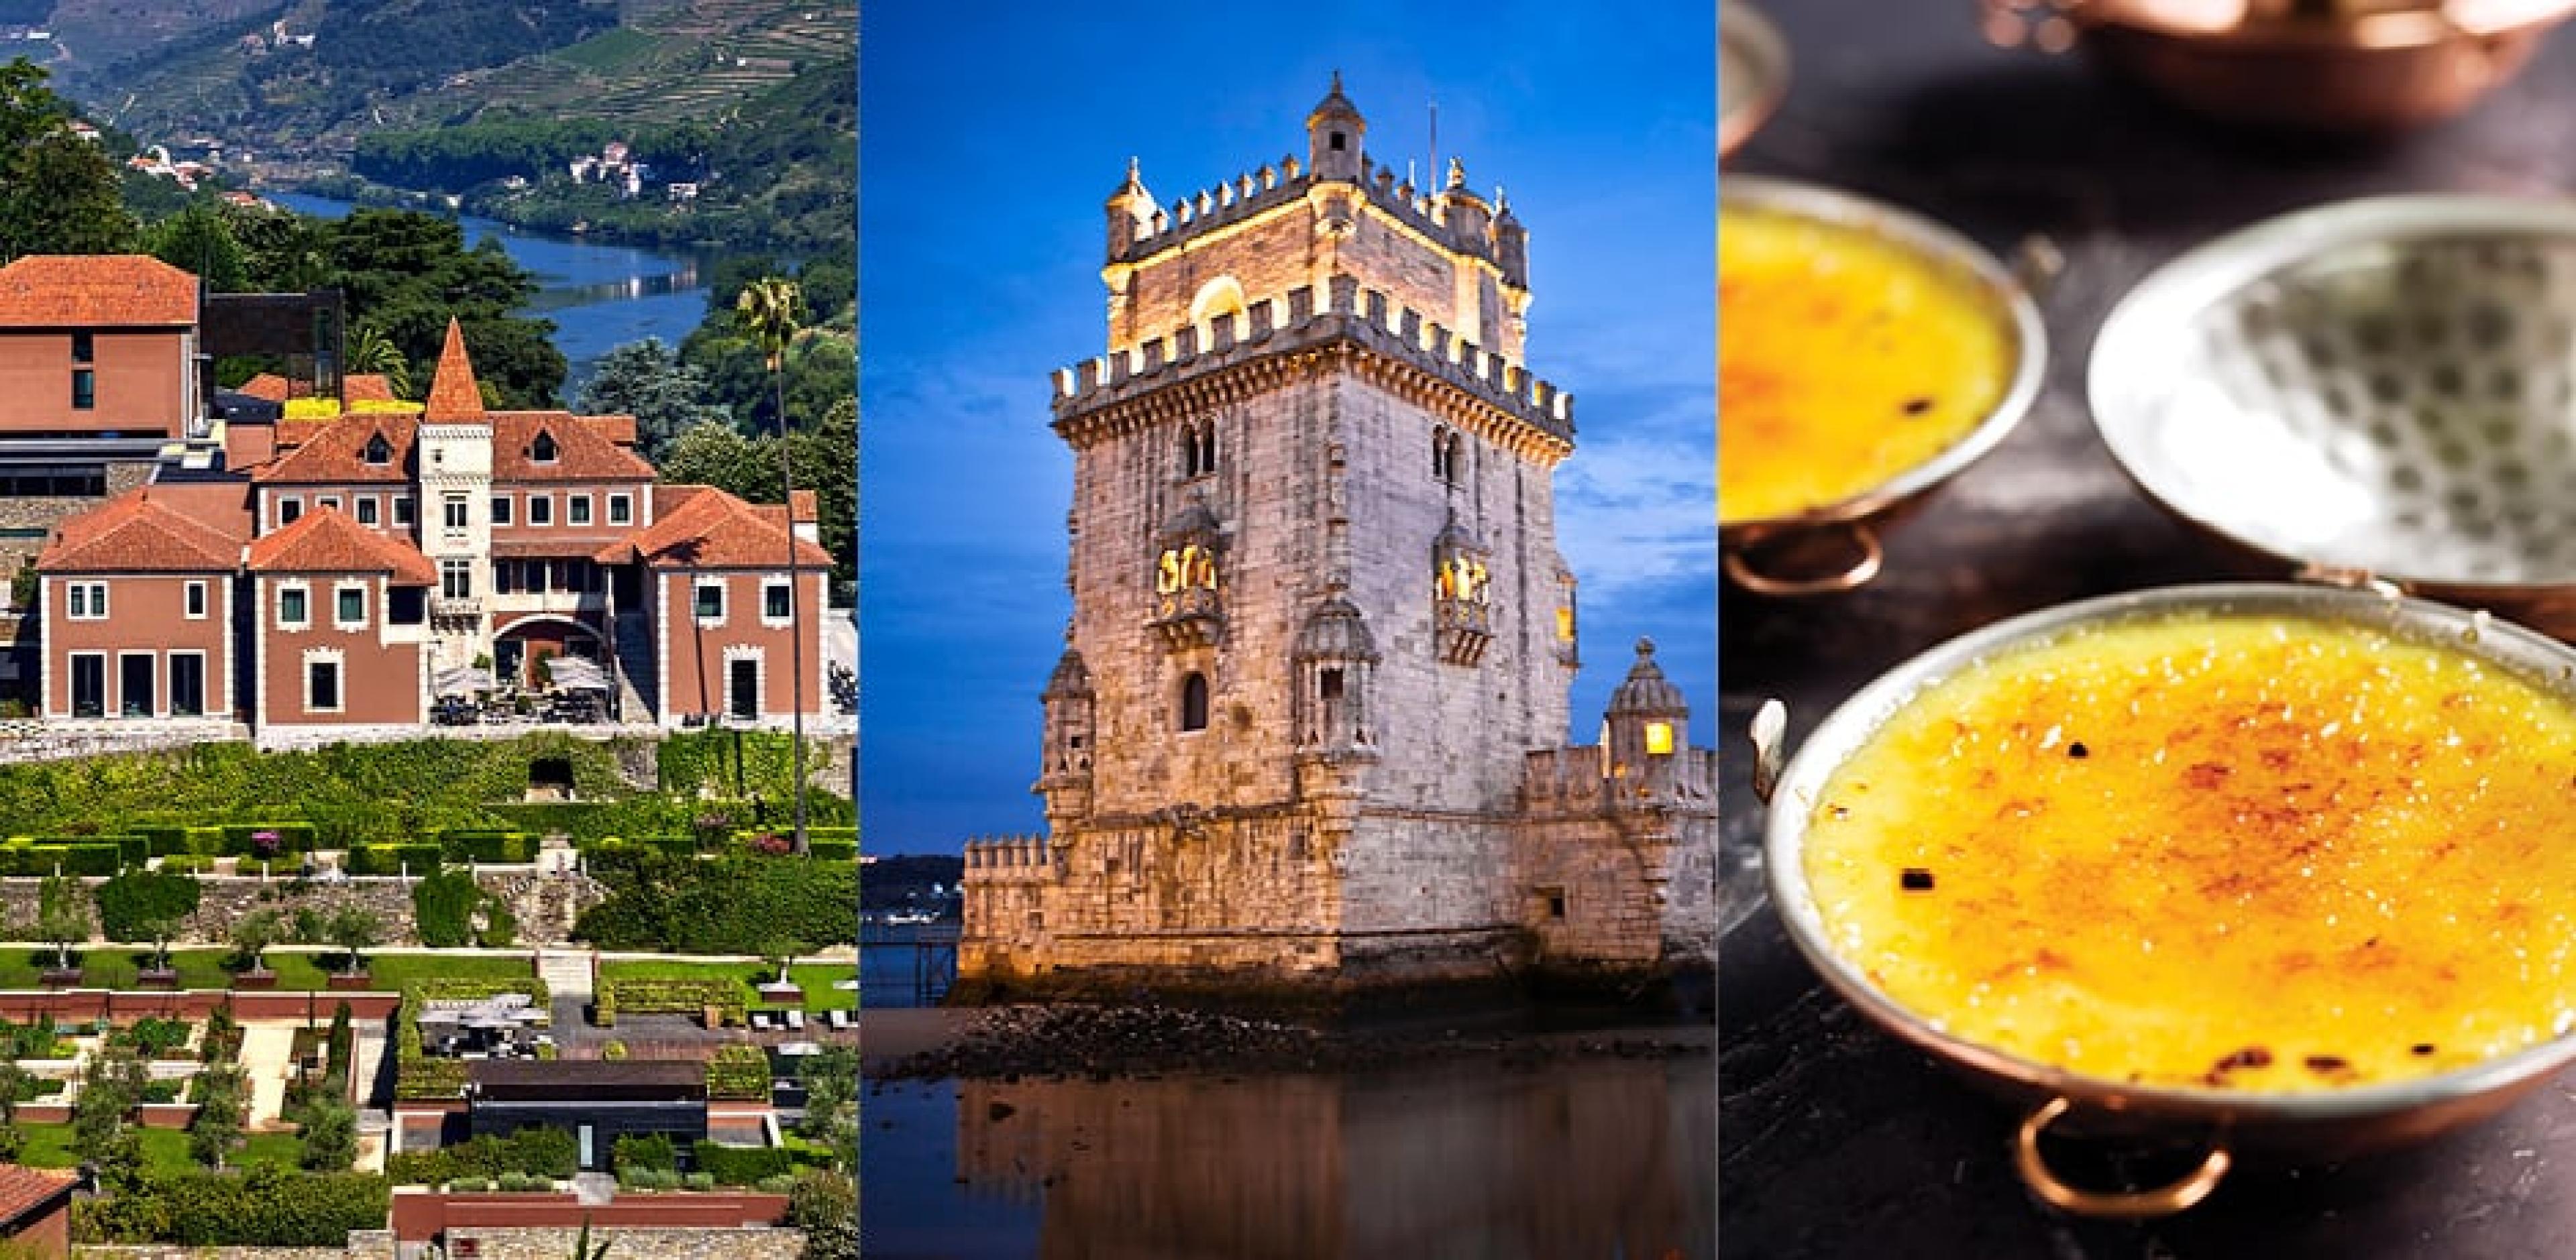 Six Senses Portugal resort, old building, and custard desserts